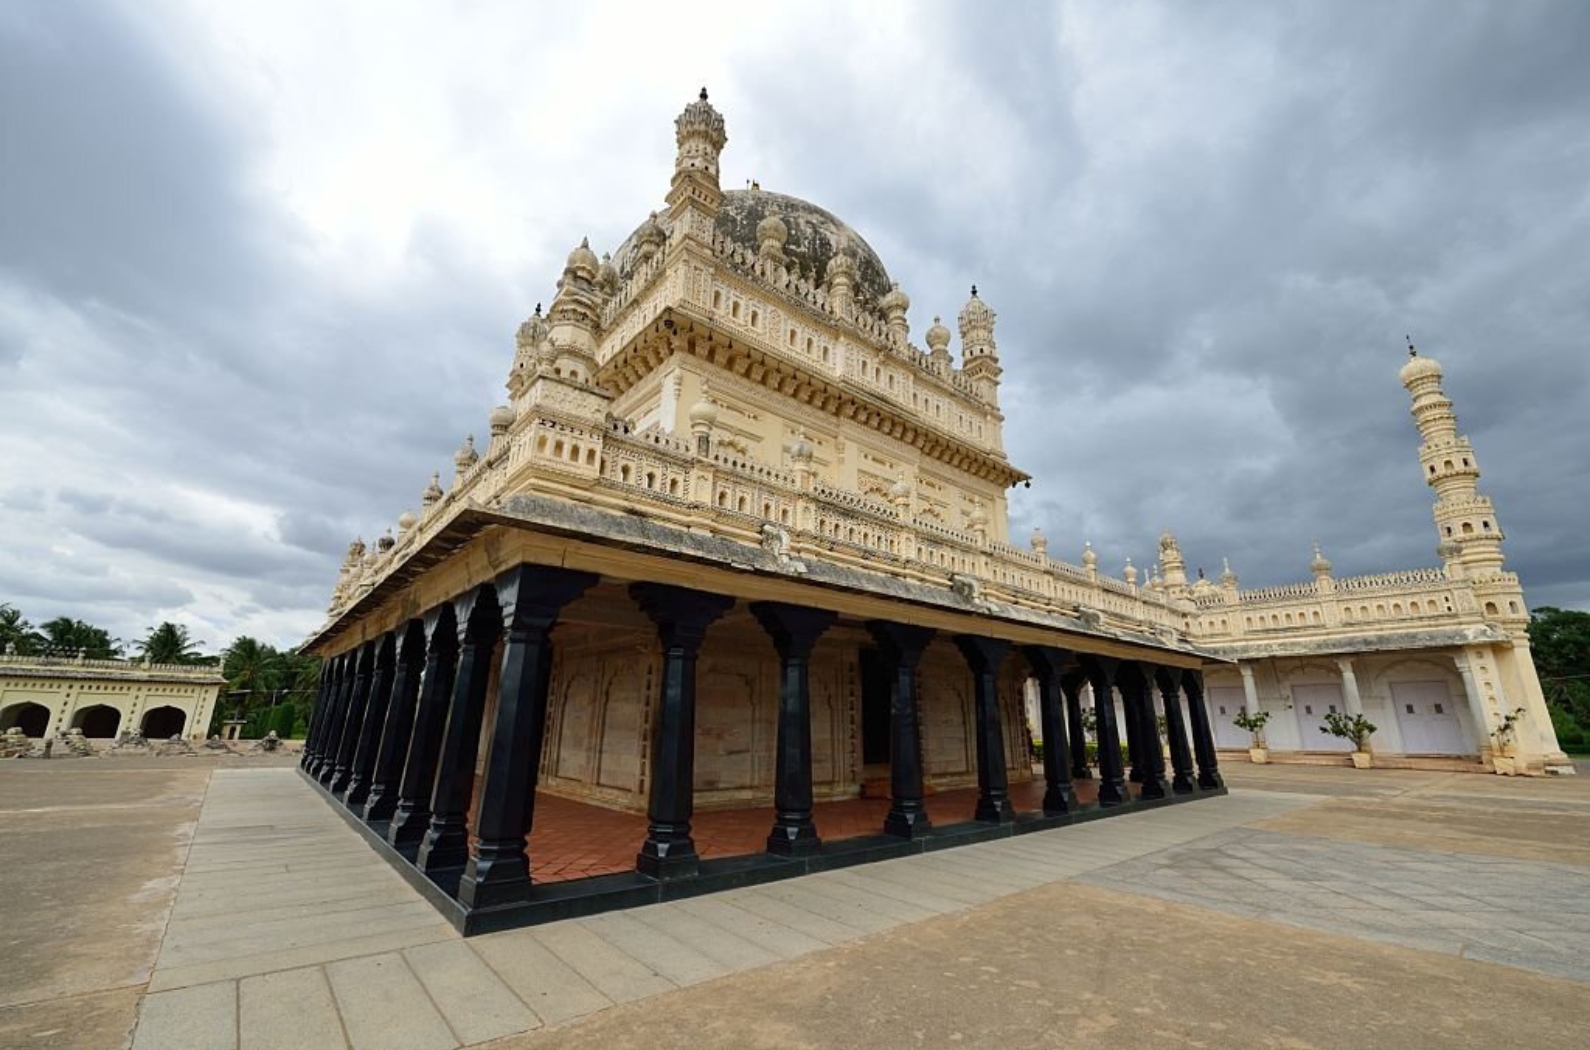 Tipu Sultan's Summer Palace near Bangalore, India.